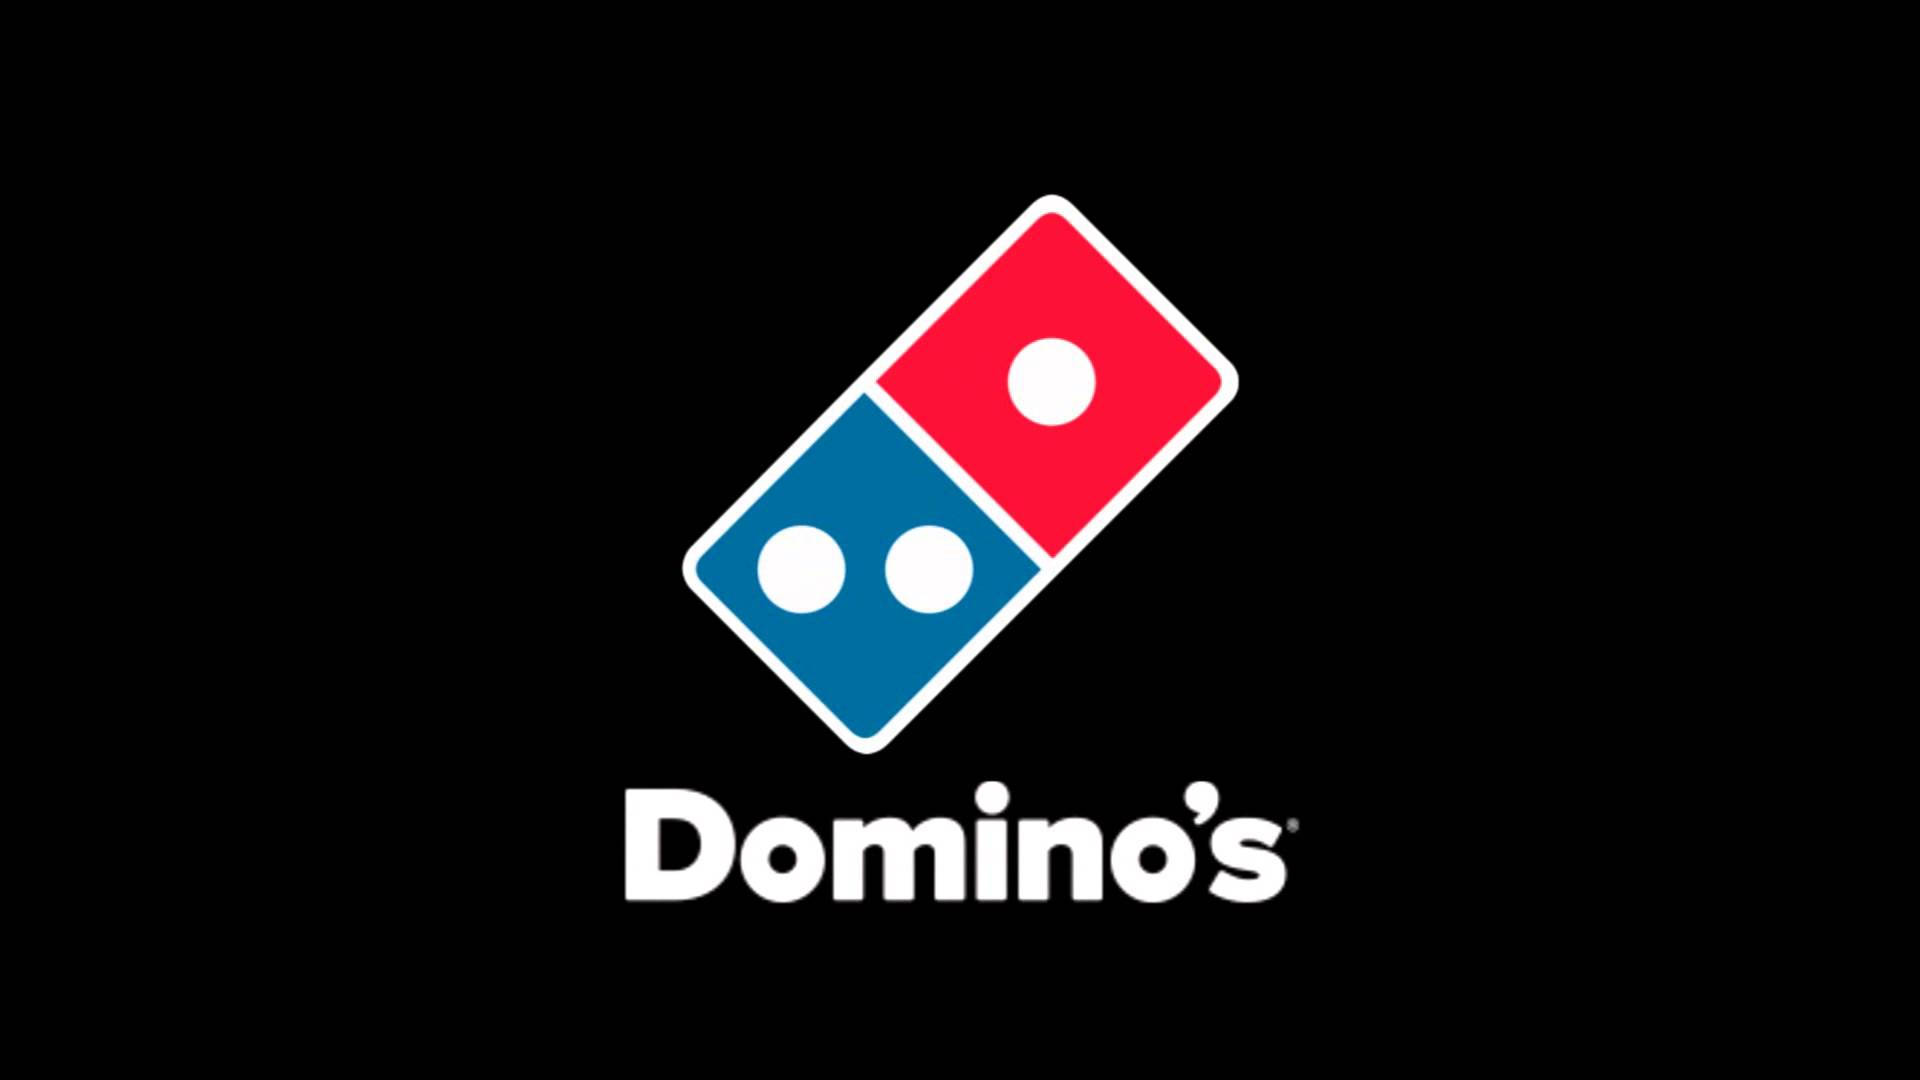 Schwarzesdominos Pizza Logo Wallpaper